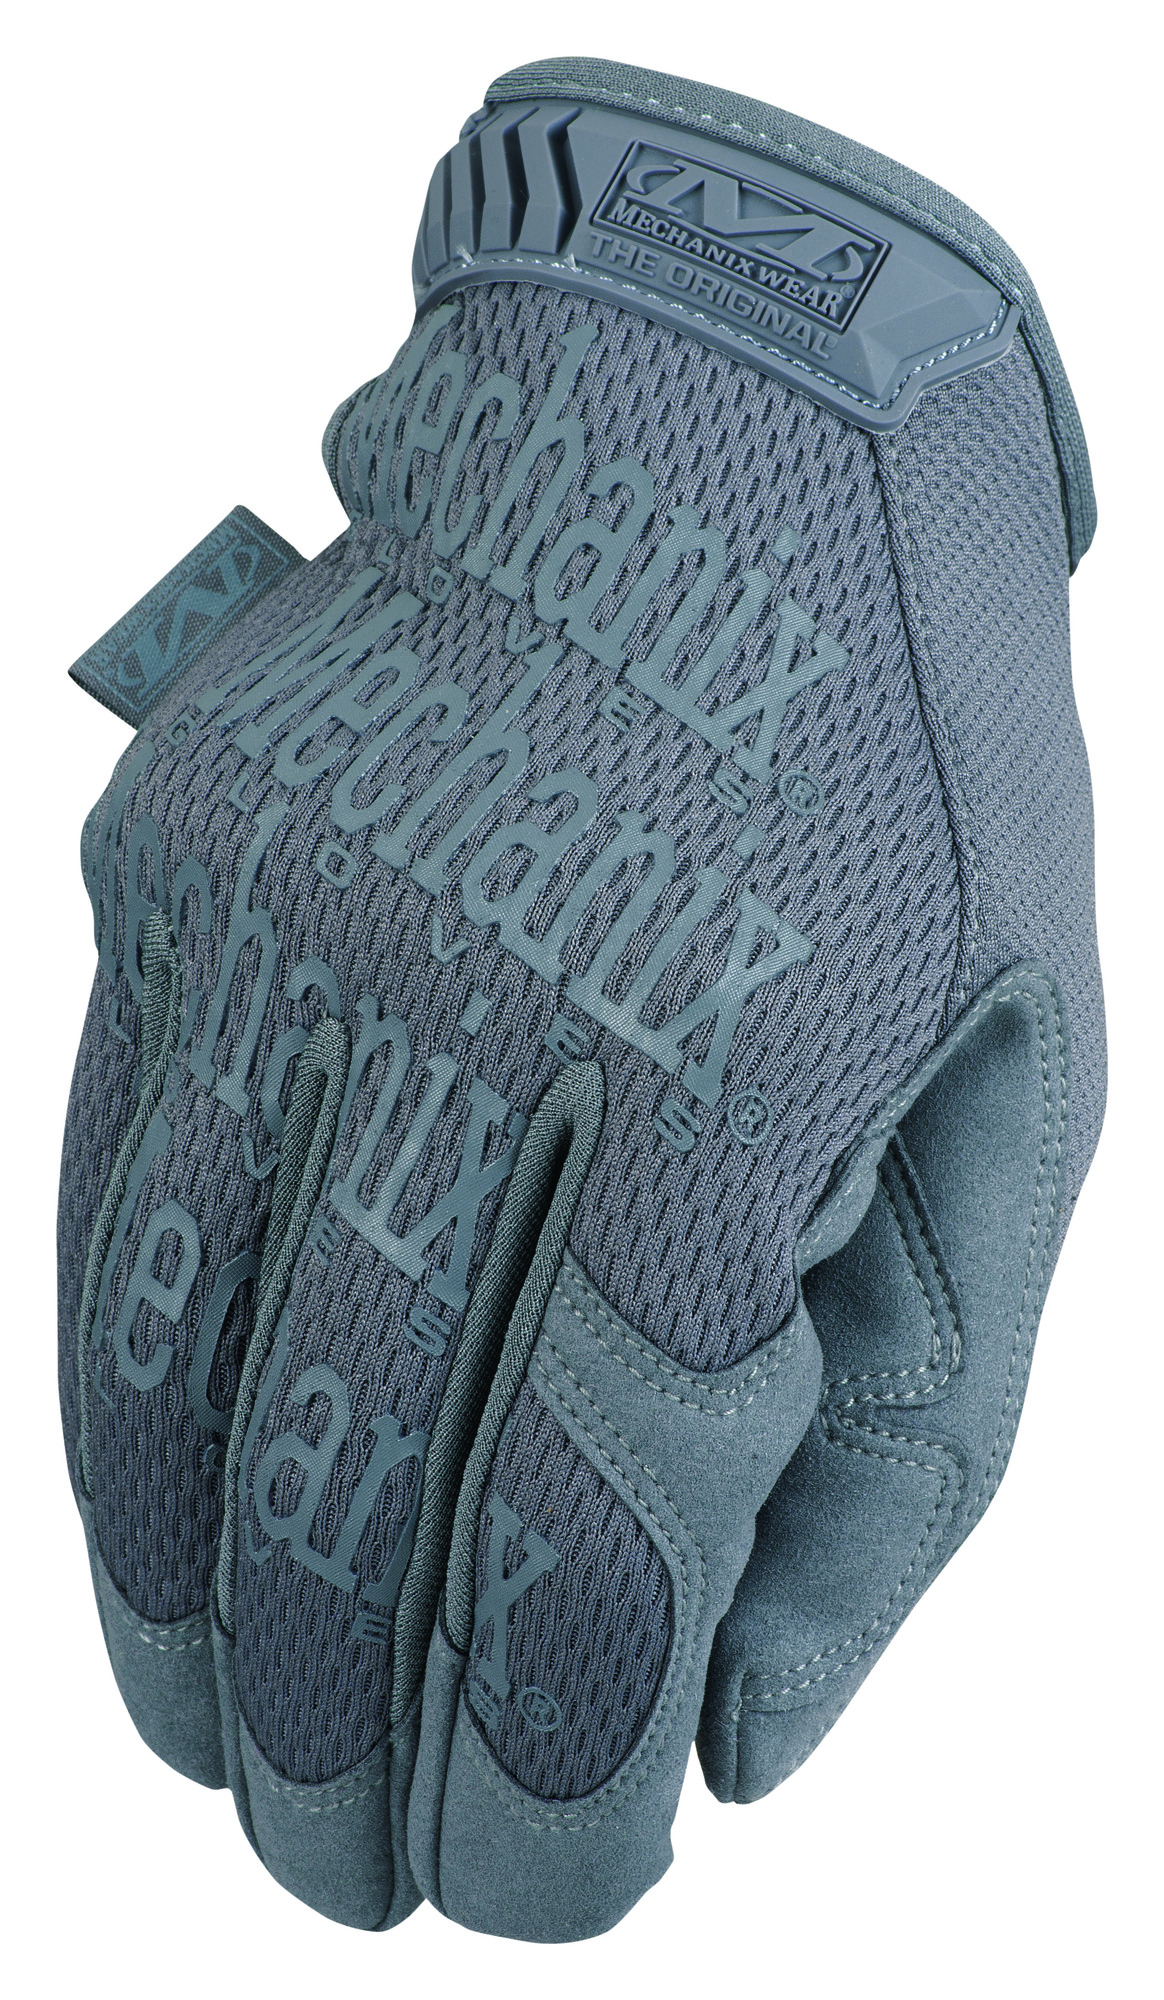 MECHANIX rukavice so syntetickou kožou Original - Wolf Grey L/10